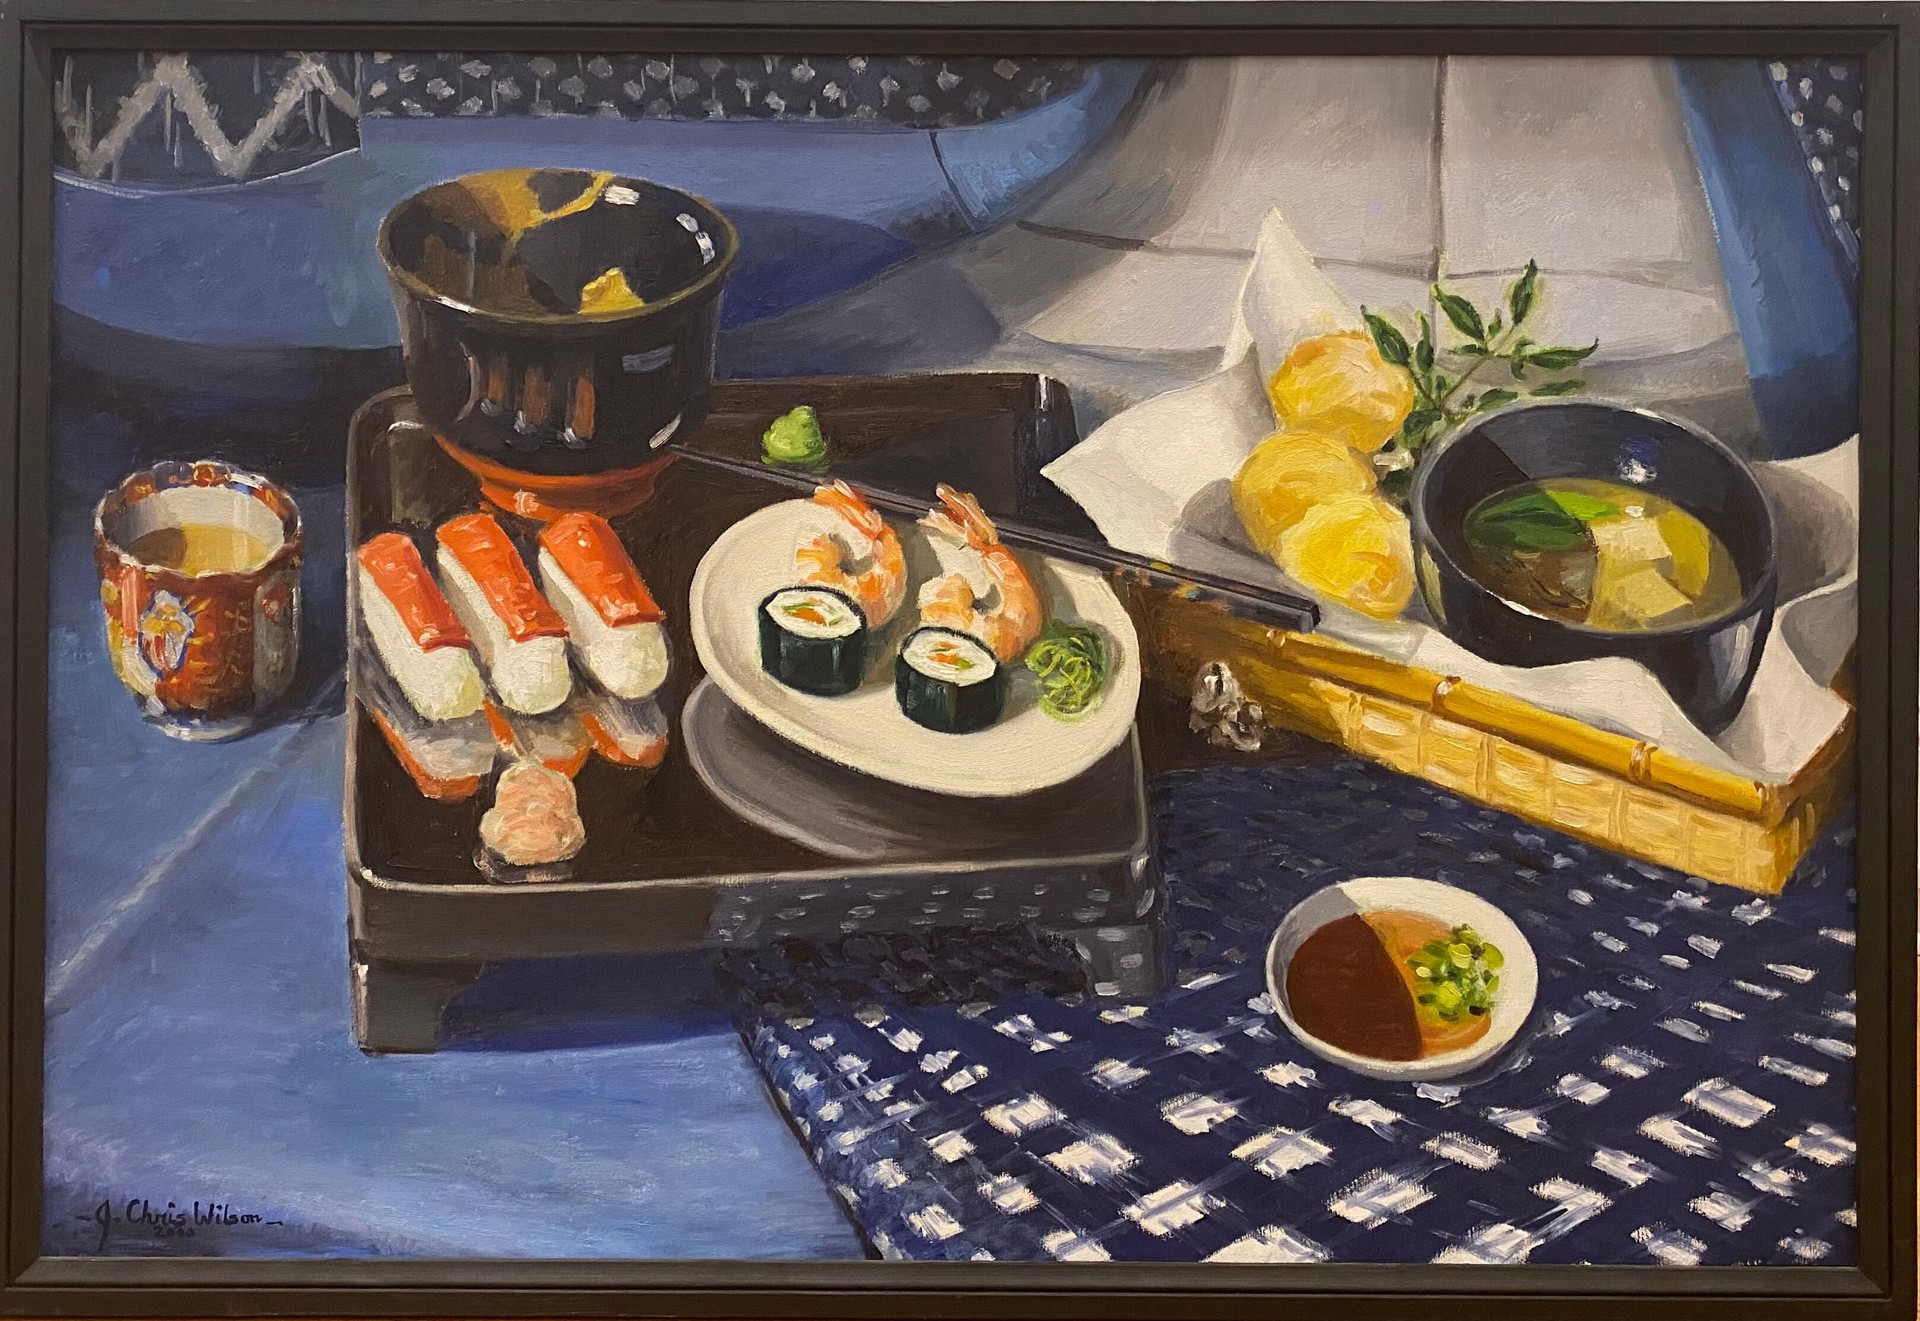 Sushi, Tempura, and Miso Soup by J. Chris Wilson